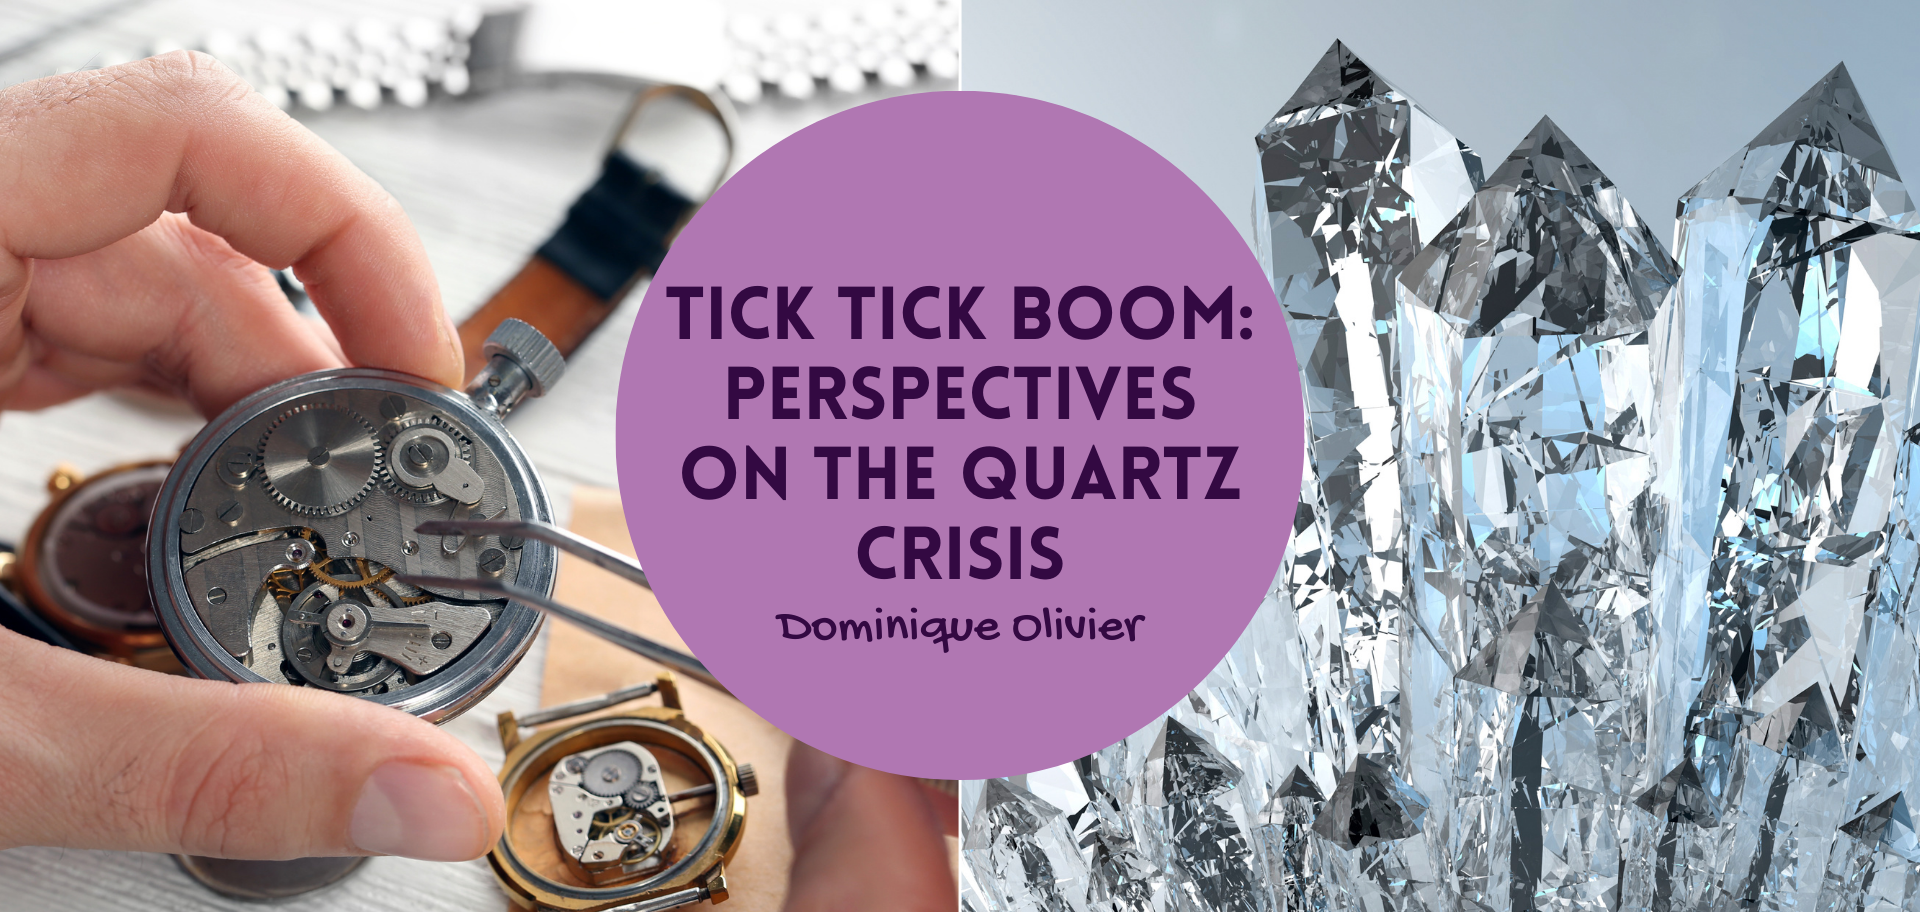 Tick tick boom: perspectives on the quartz crisis